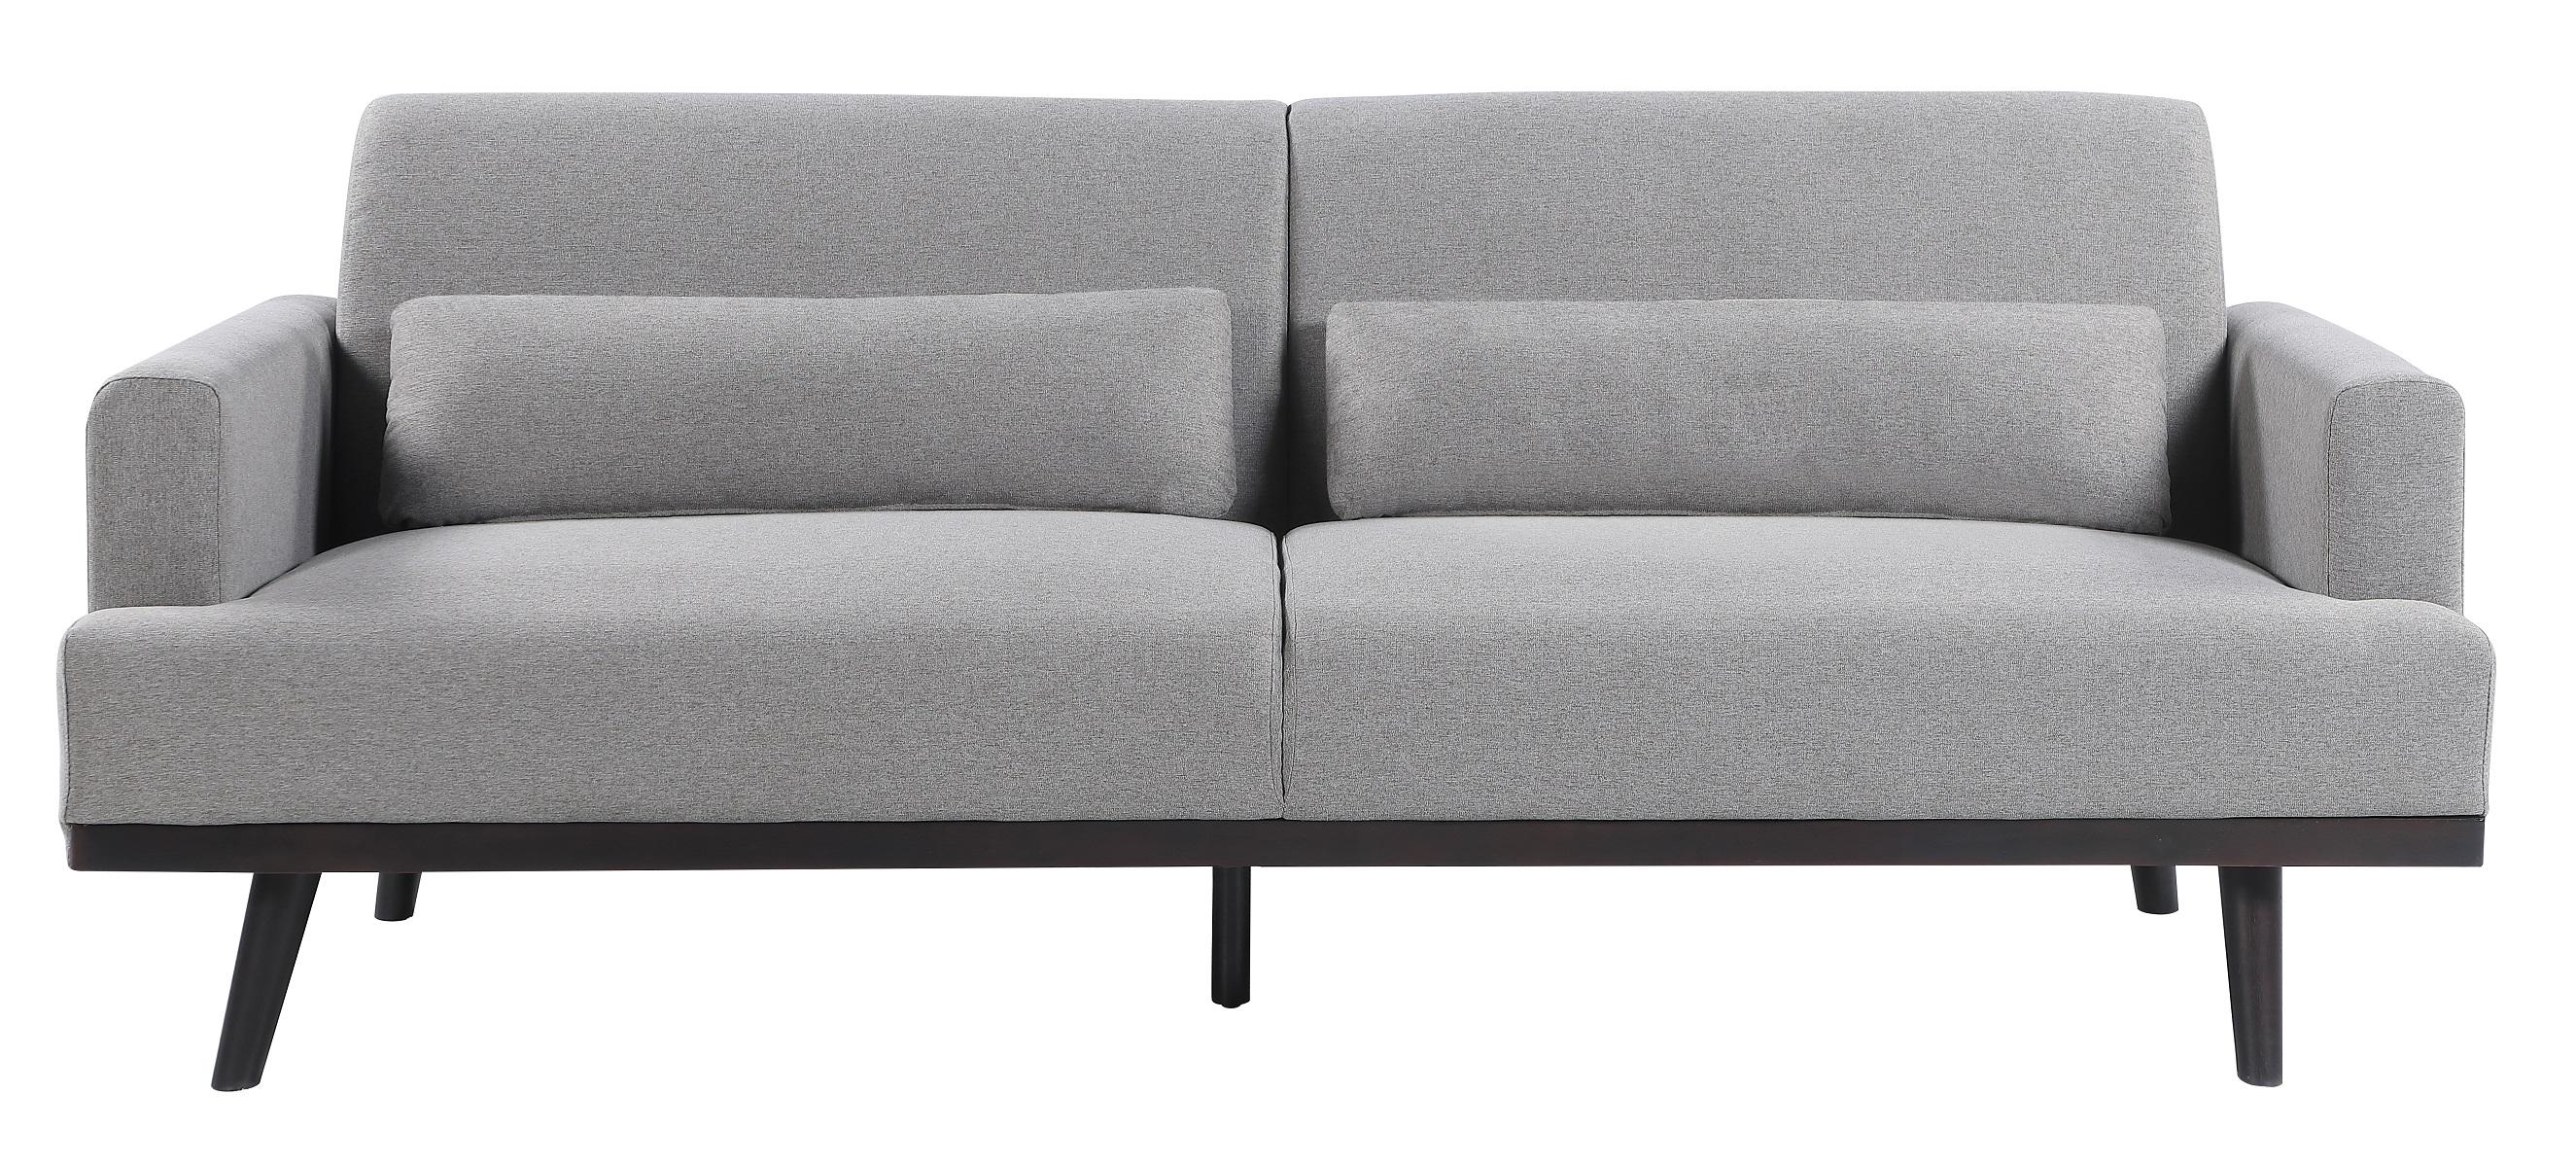 Contemporary Sofa 511121 Blake 511121 in Gray 